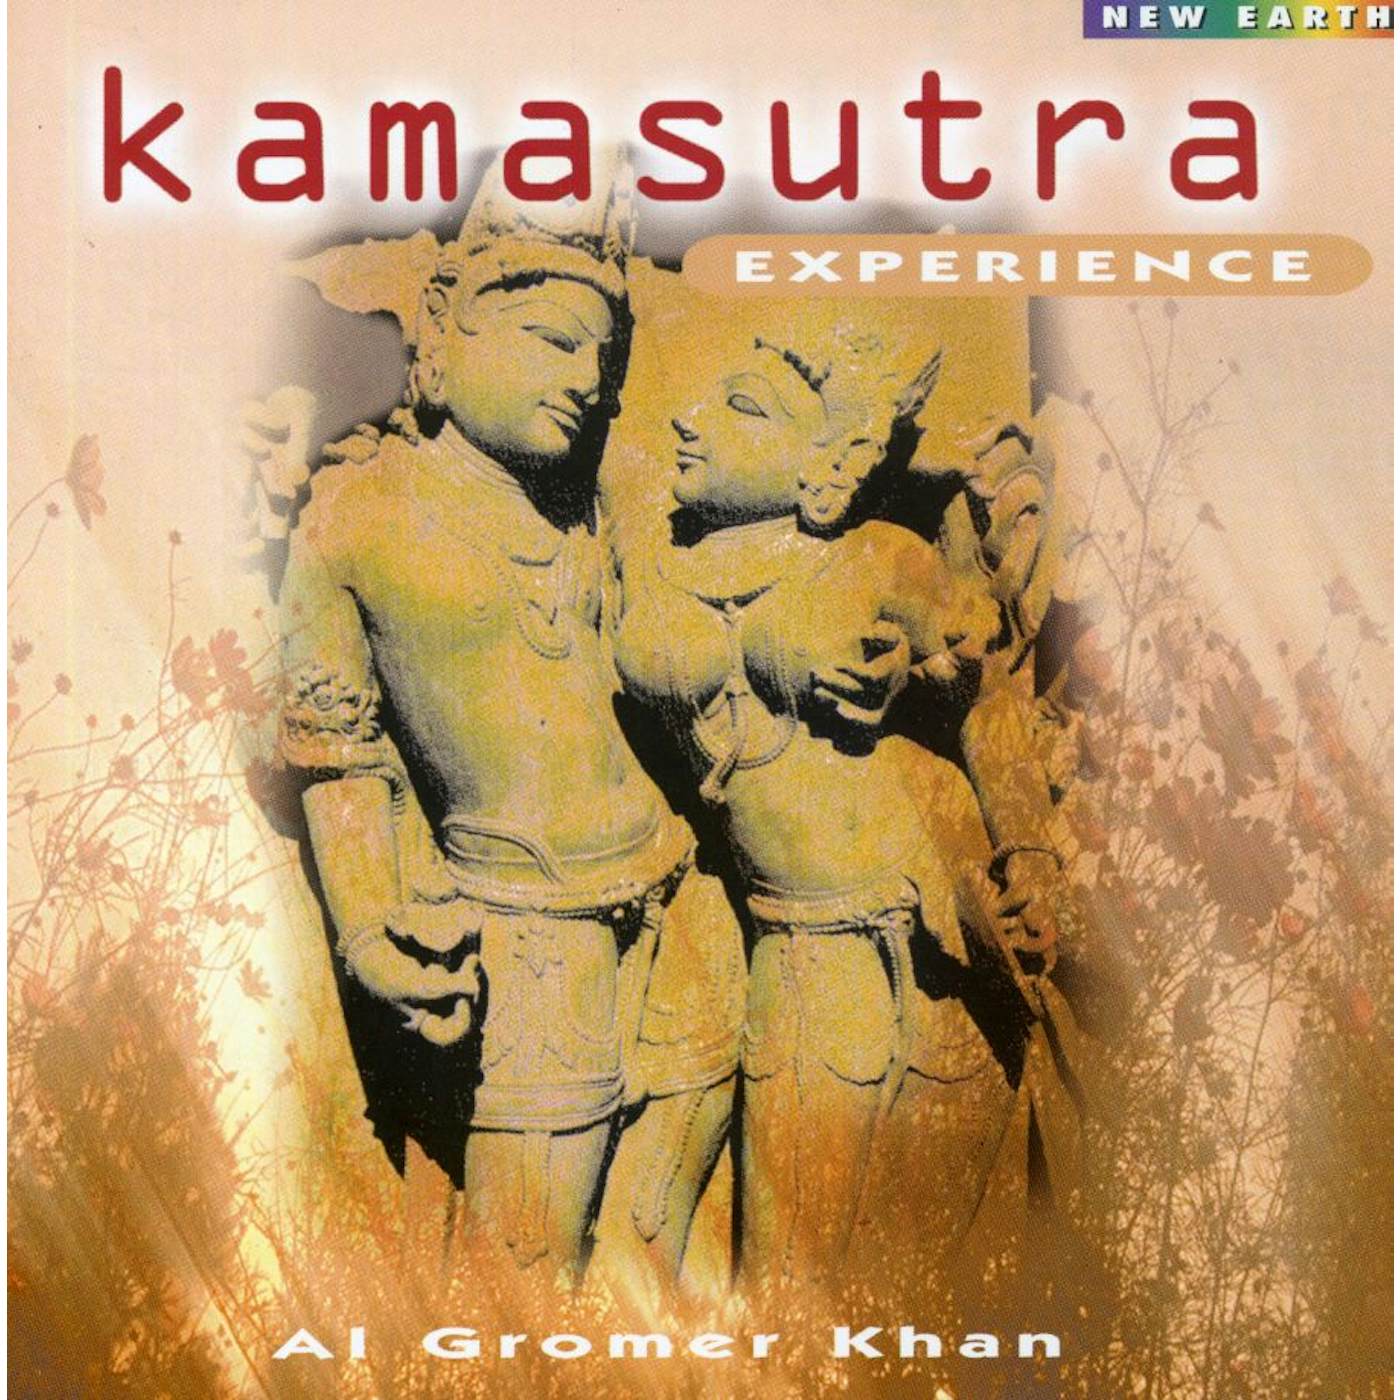 Al Gromer Khan KAMASUTRA EXPERIENCE CD